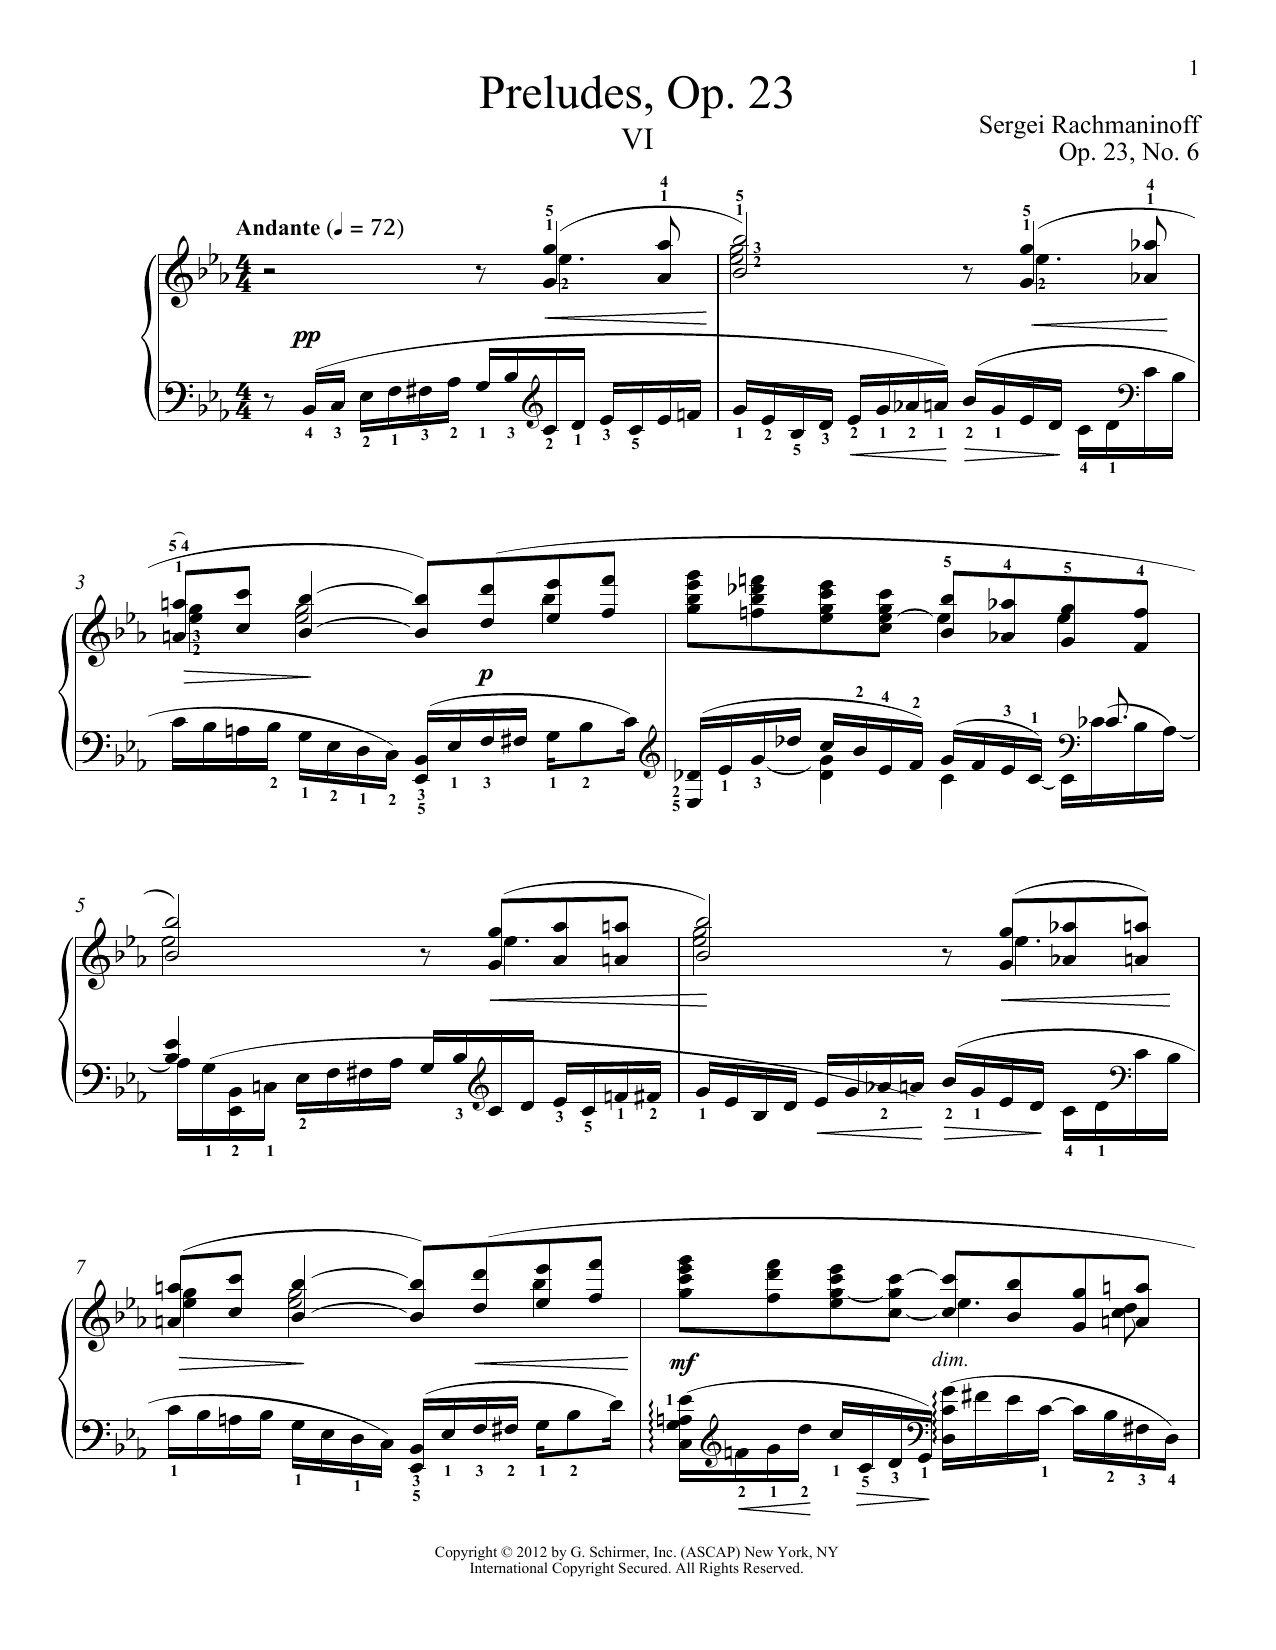 Sergei Rachmaninoff Prelude In E-Flat Major, Op. 23, No. 6 sheet music notes printable PDF score